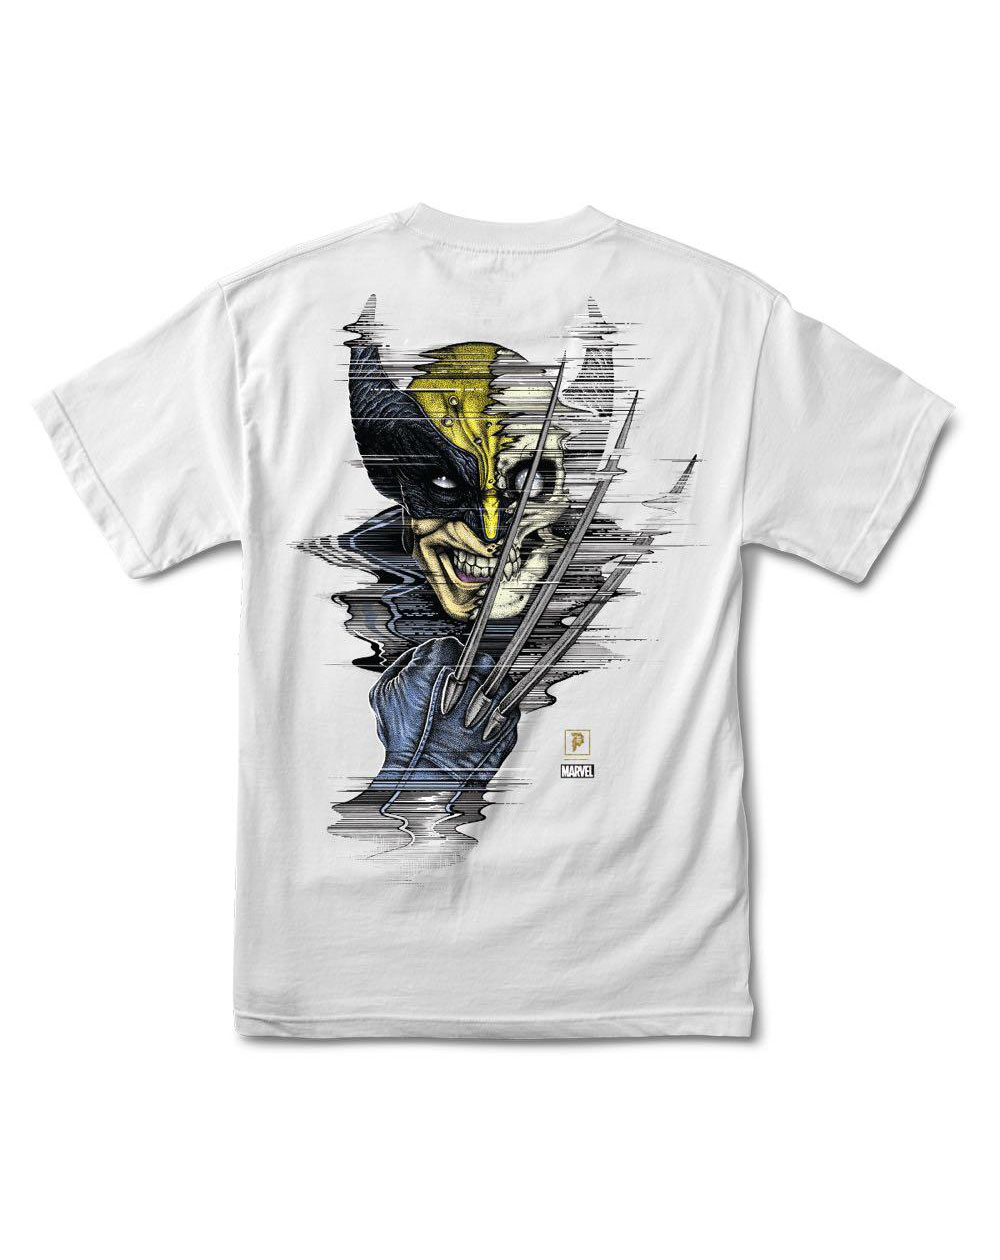 Primitive Paul Jackson x Marvel - Wolverine Camiseta para Hombre White